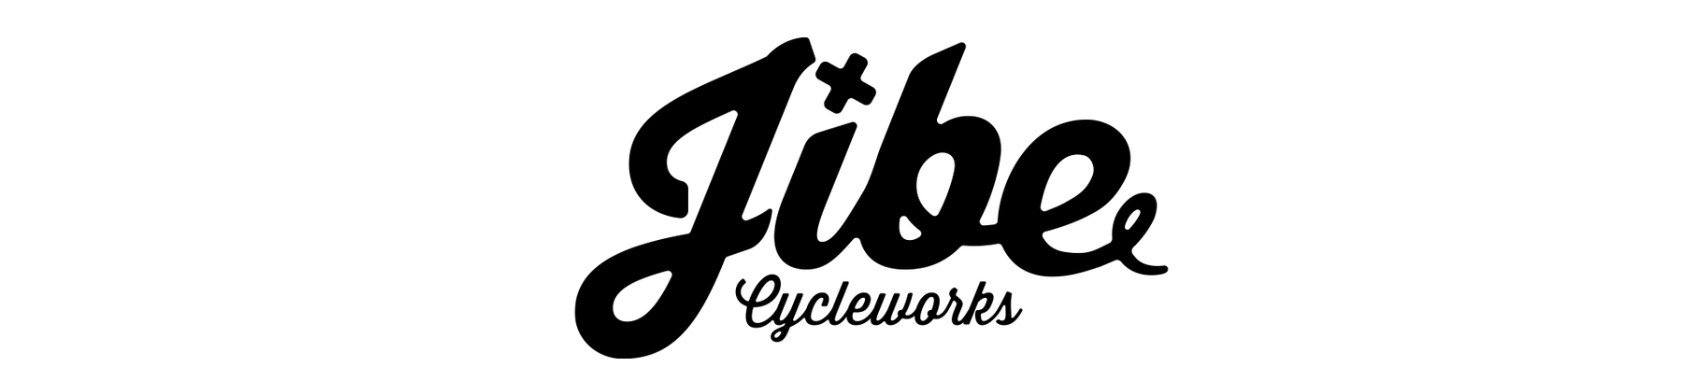 JIBE_CYCLEWORKS_BRAND_BLK_NO_BG_WIDE.png.jpg